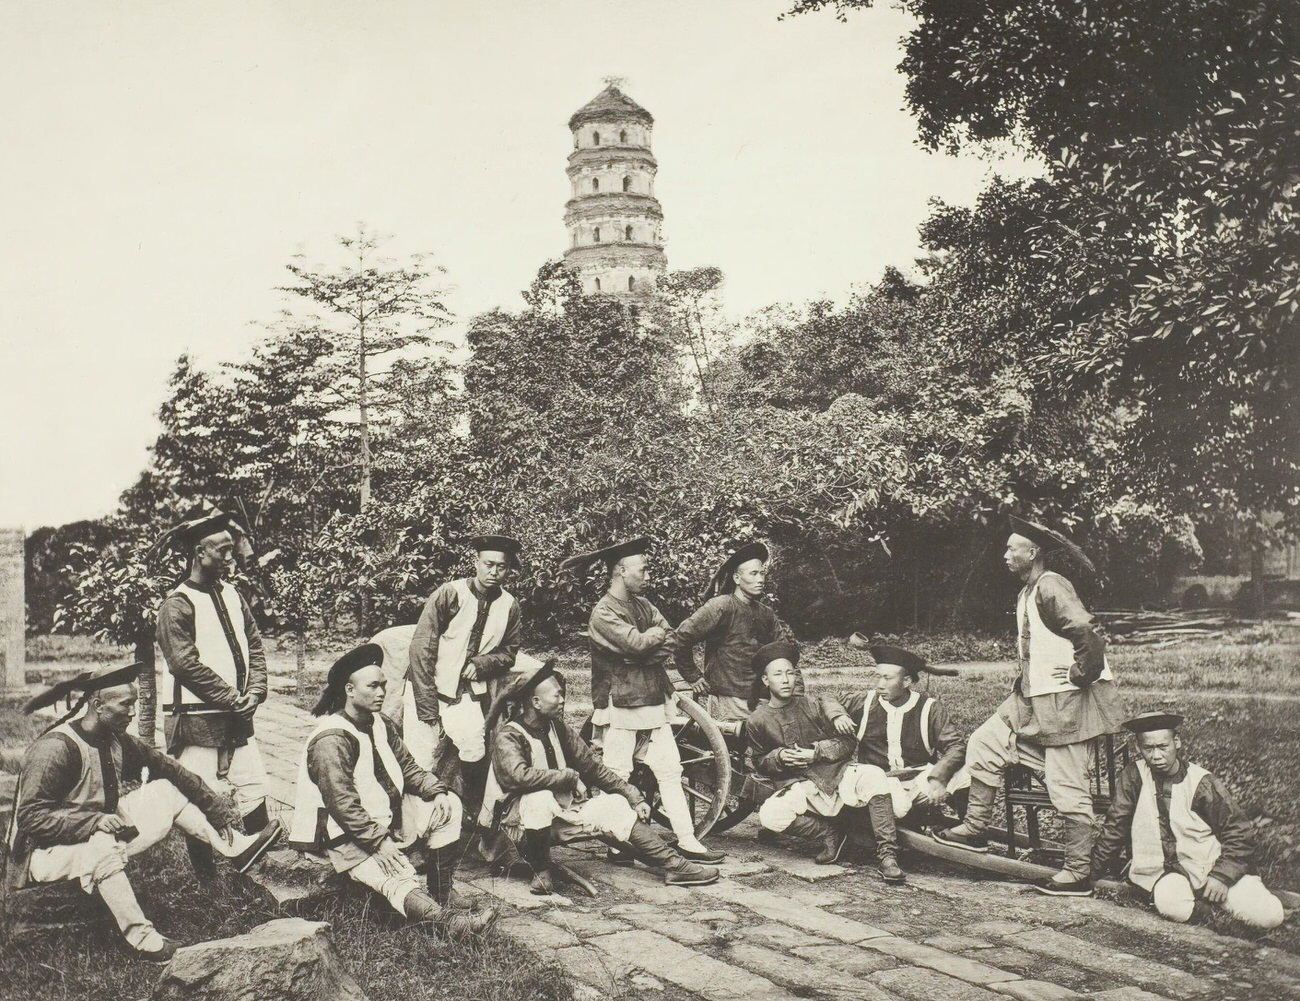 Tartar Soldiers, 1860s